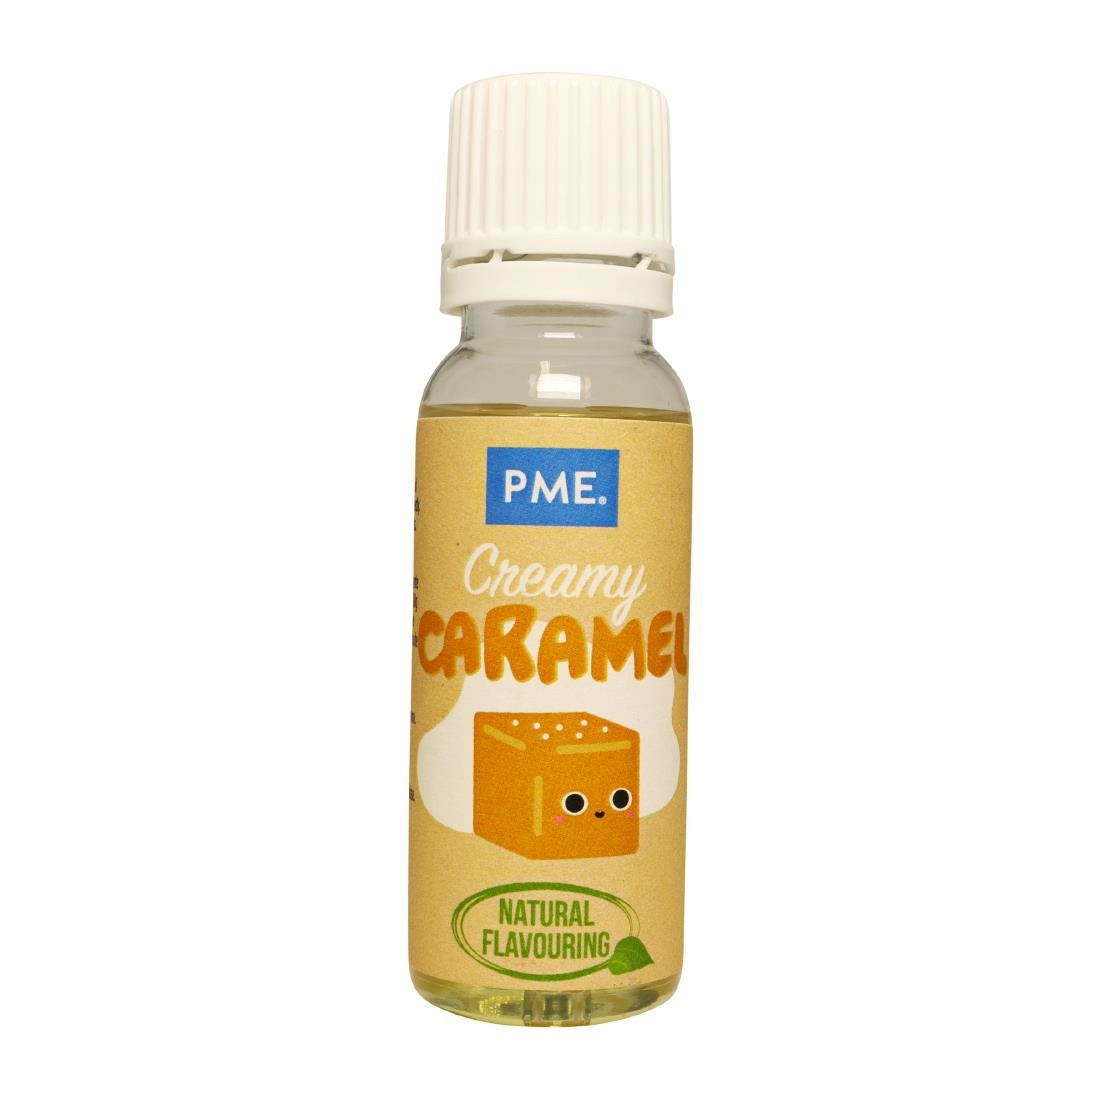 PME 100 Natural Flavour Caramel 25g (HU249)